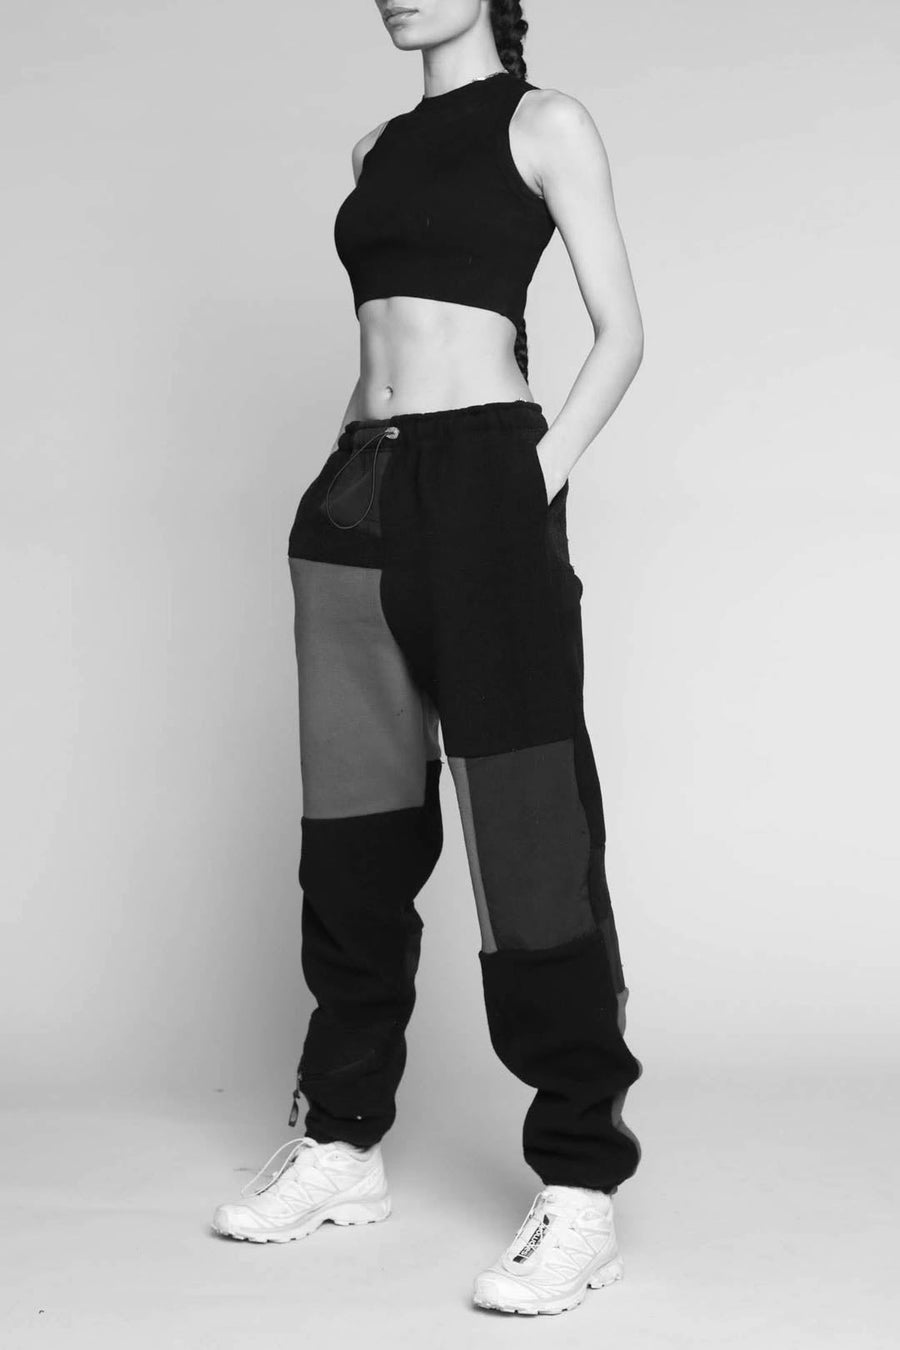 Rework Unisex North Face Patchwork Fleece Pant - Women-XS – Frankie  Collective